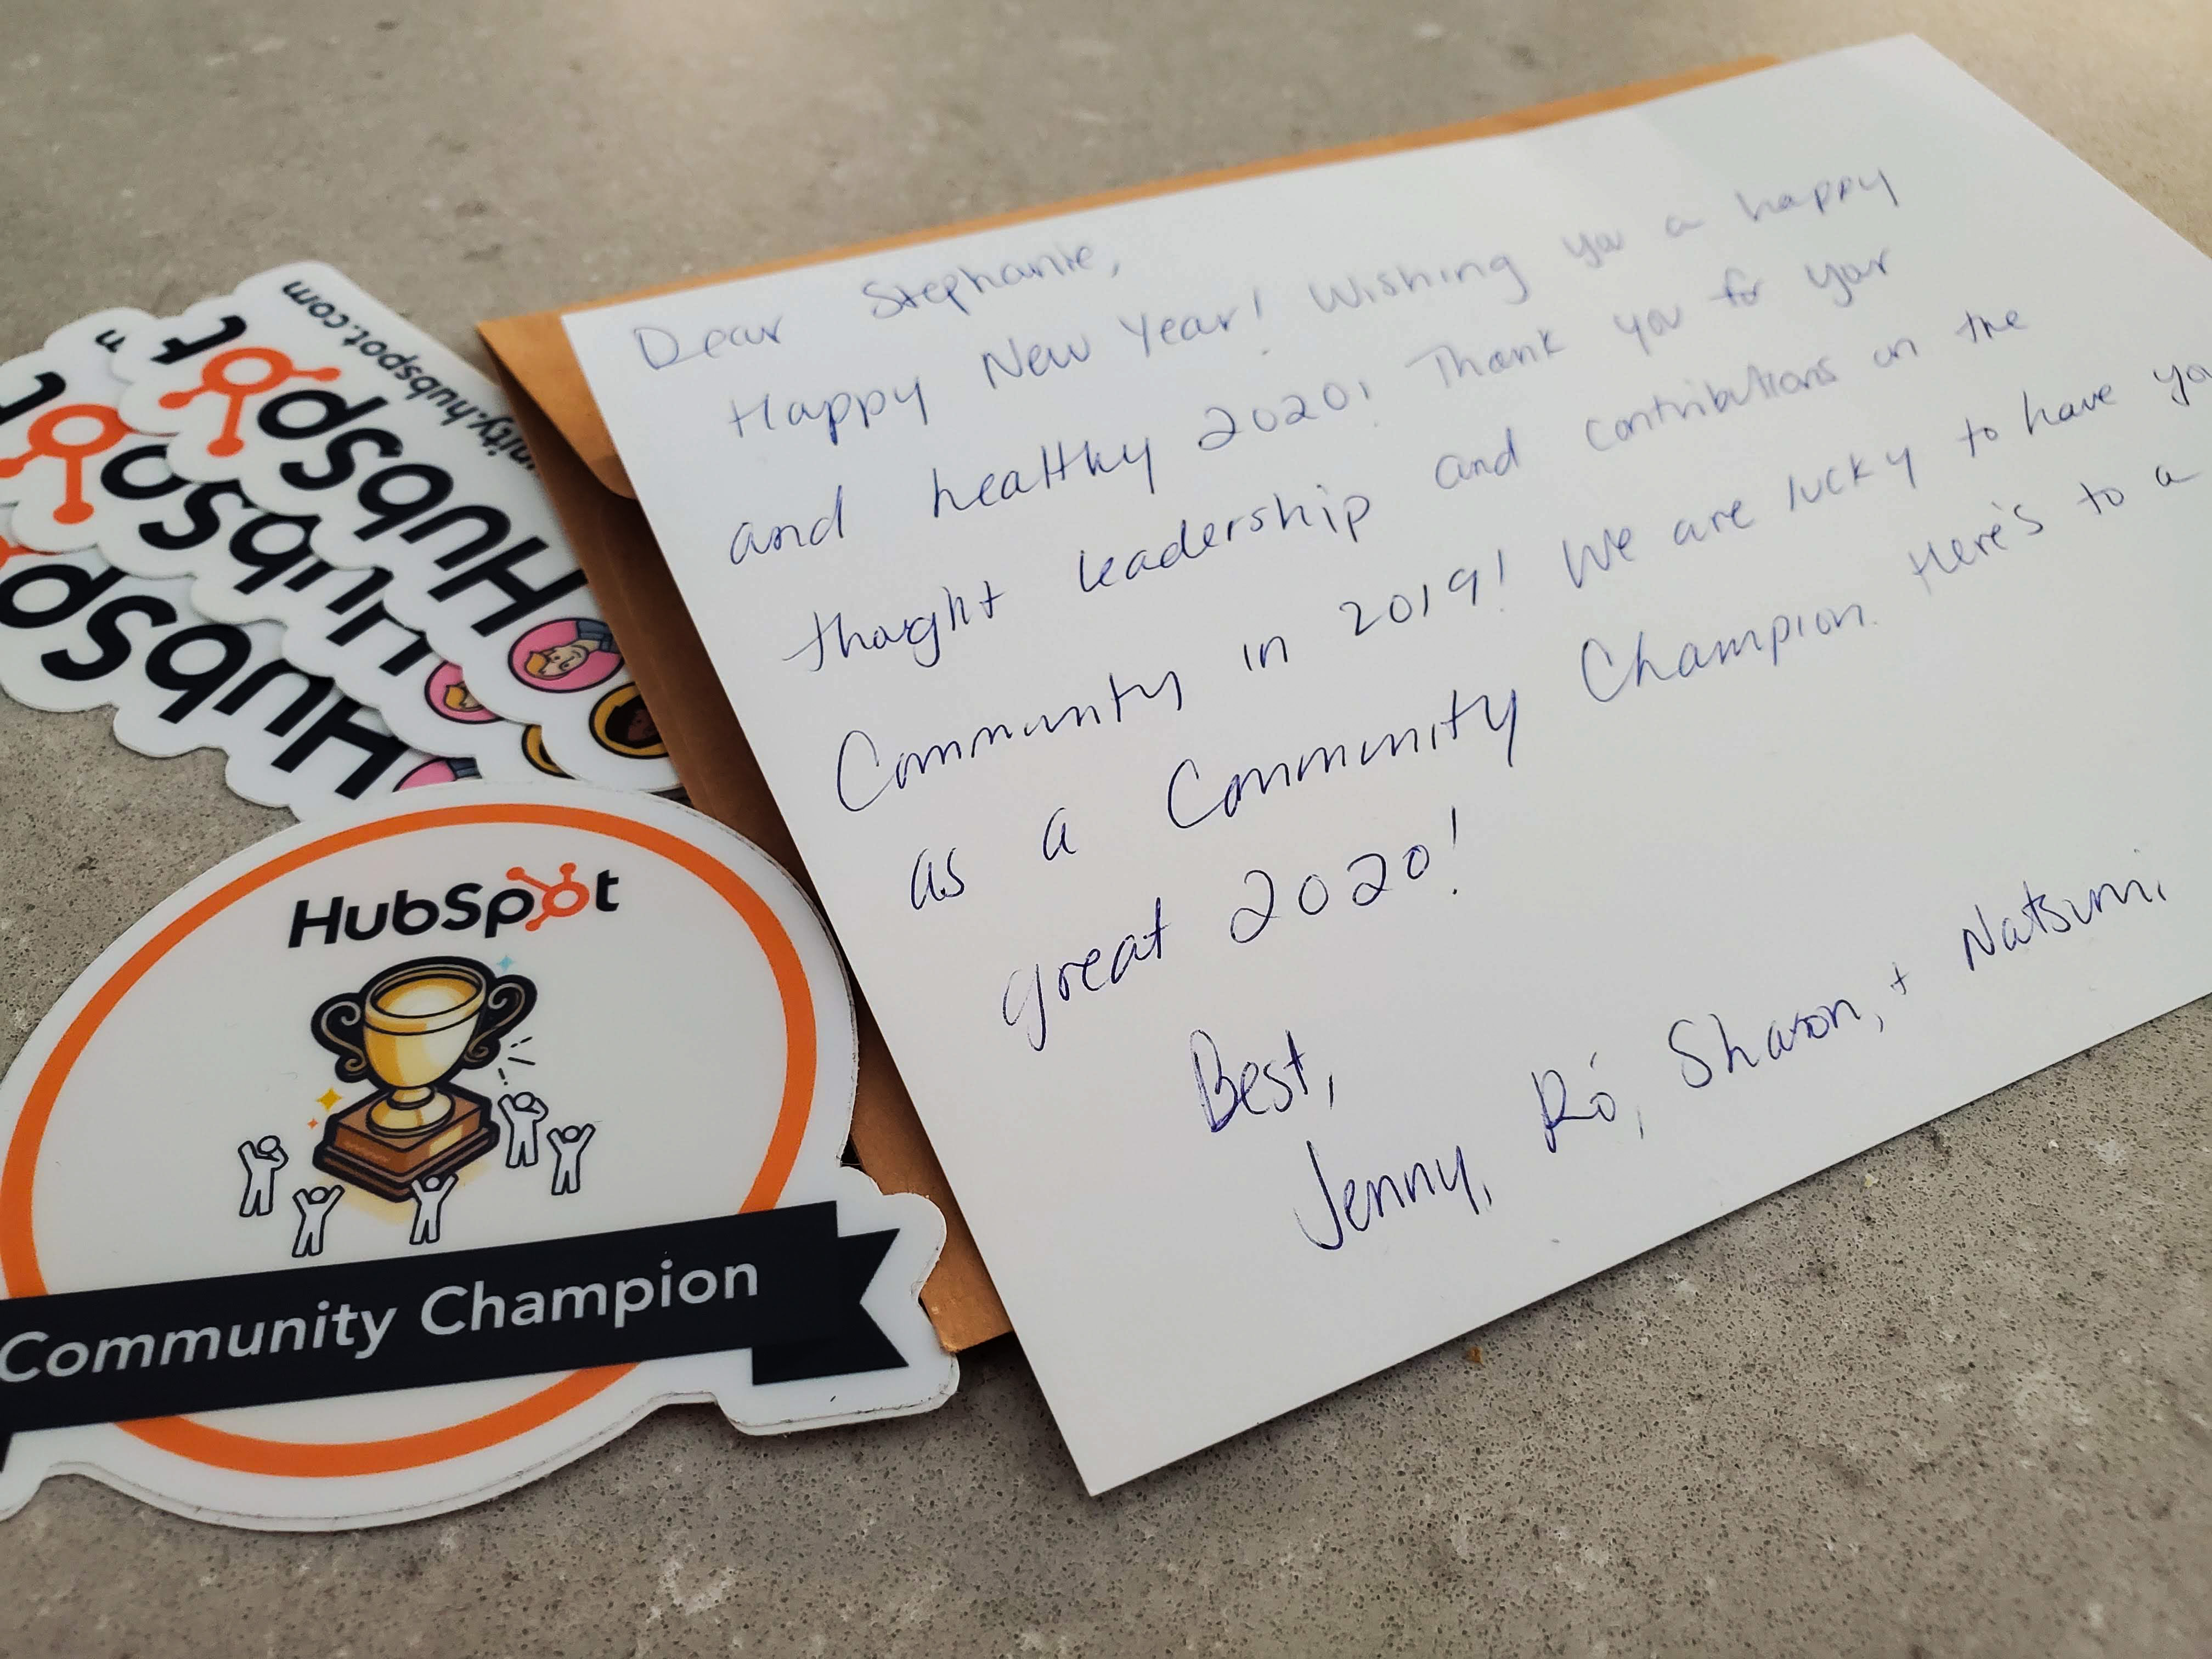 HubSpot Community Champion sticker